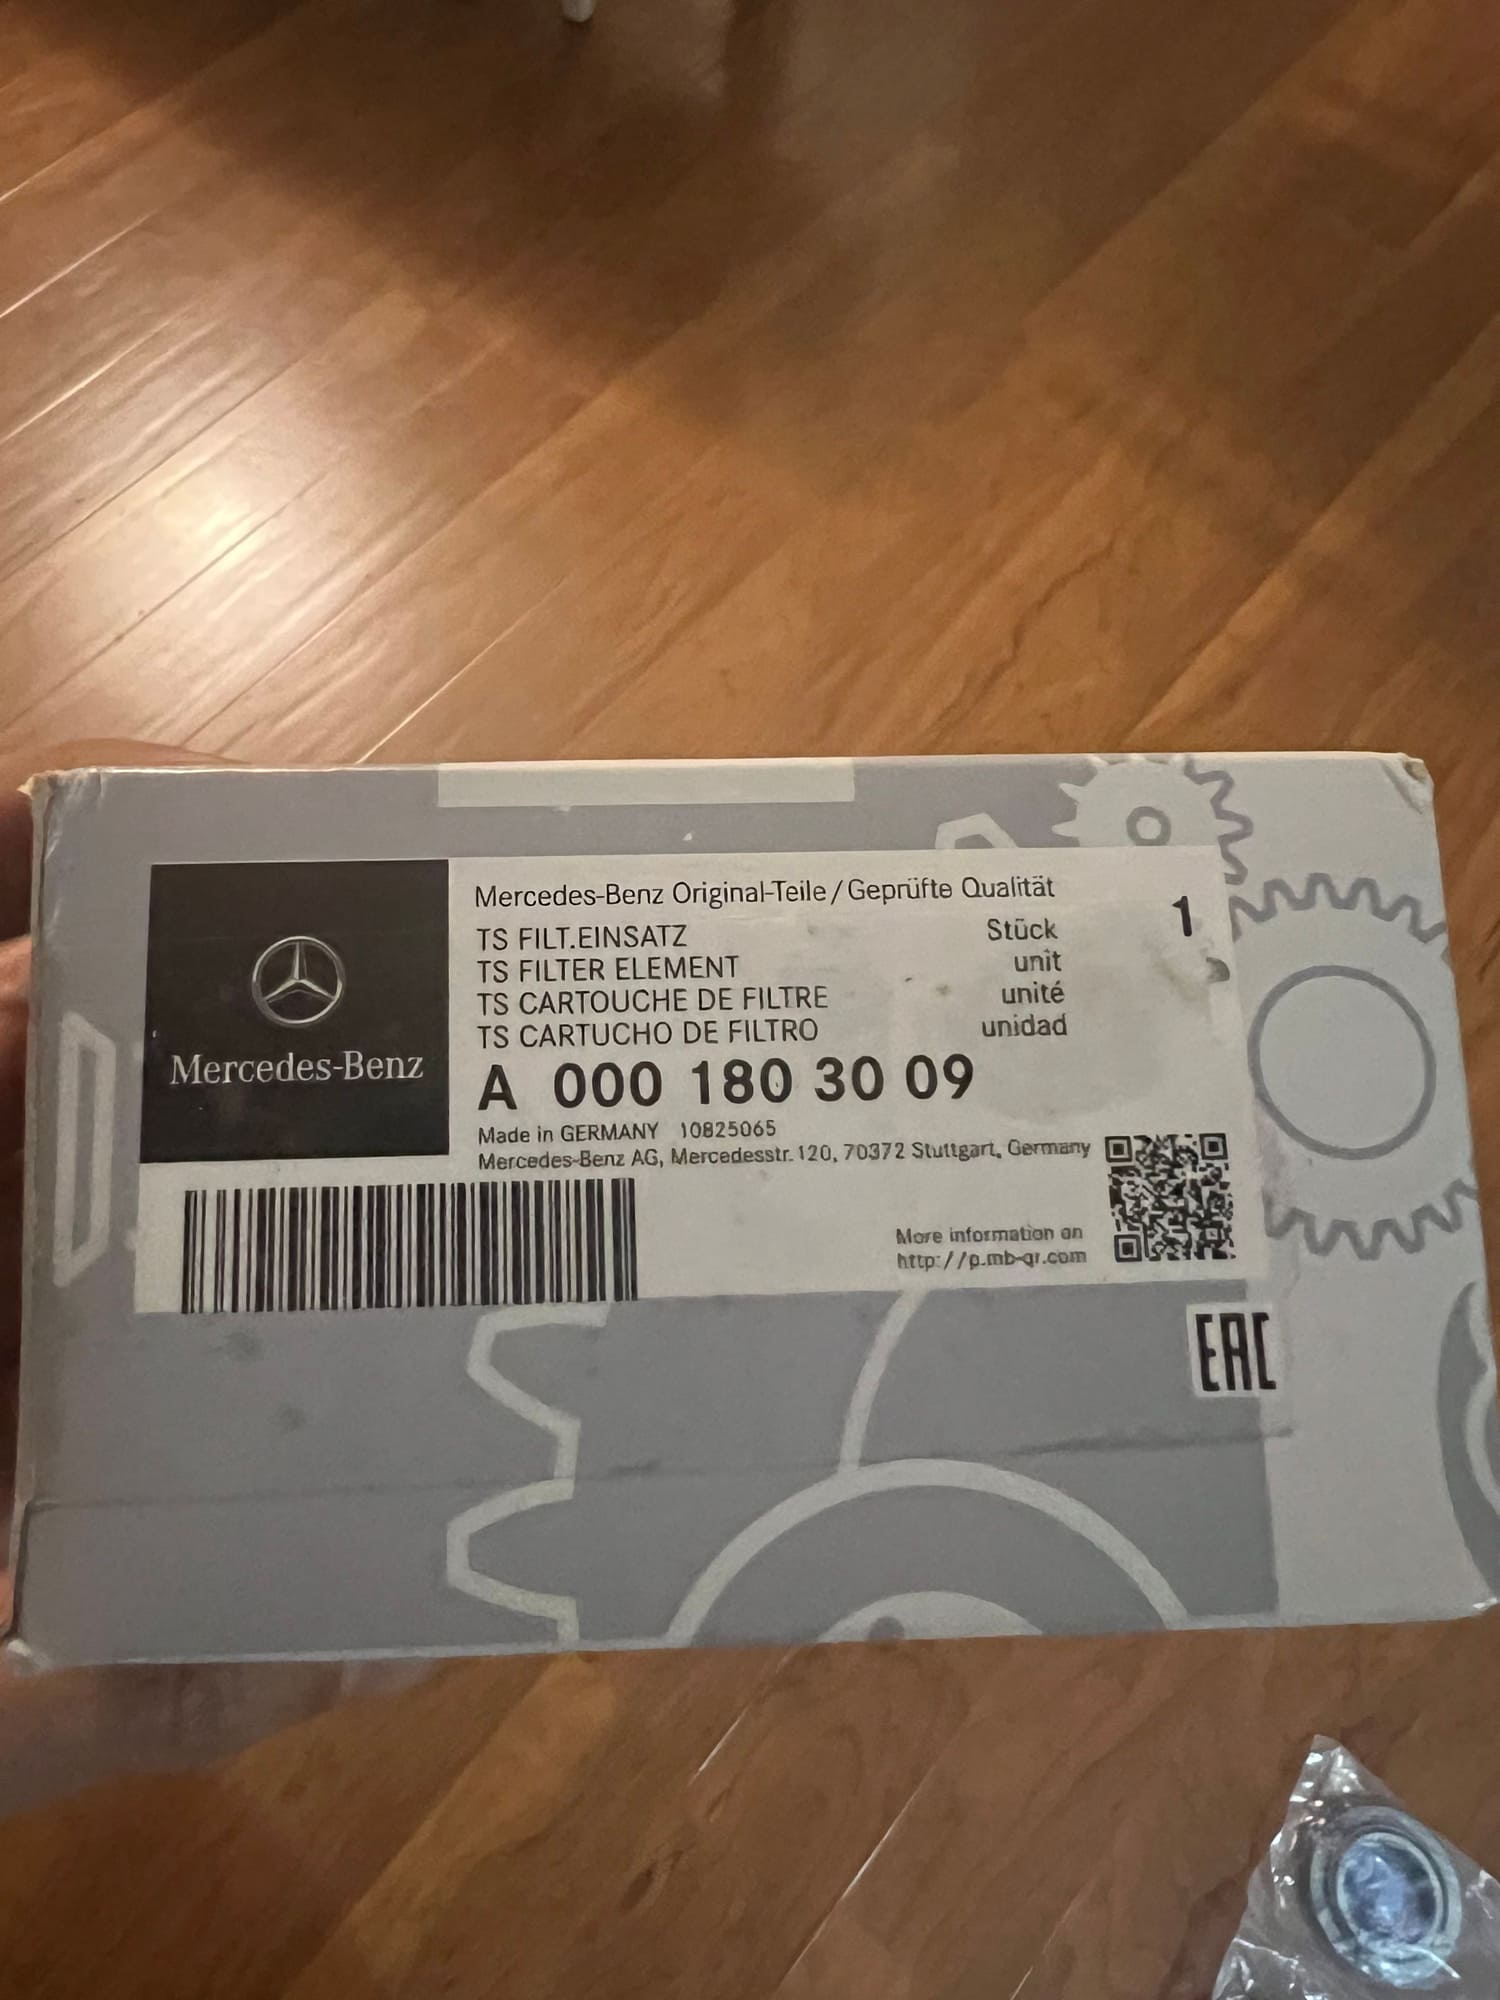 2014 Mercedes-Benz C63 AMG - A0001803009 oil filter element - Accessories - $20 - Escondido, CA 92025, United States